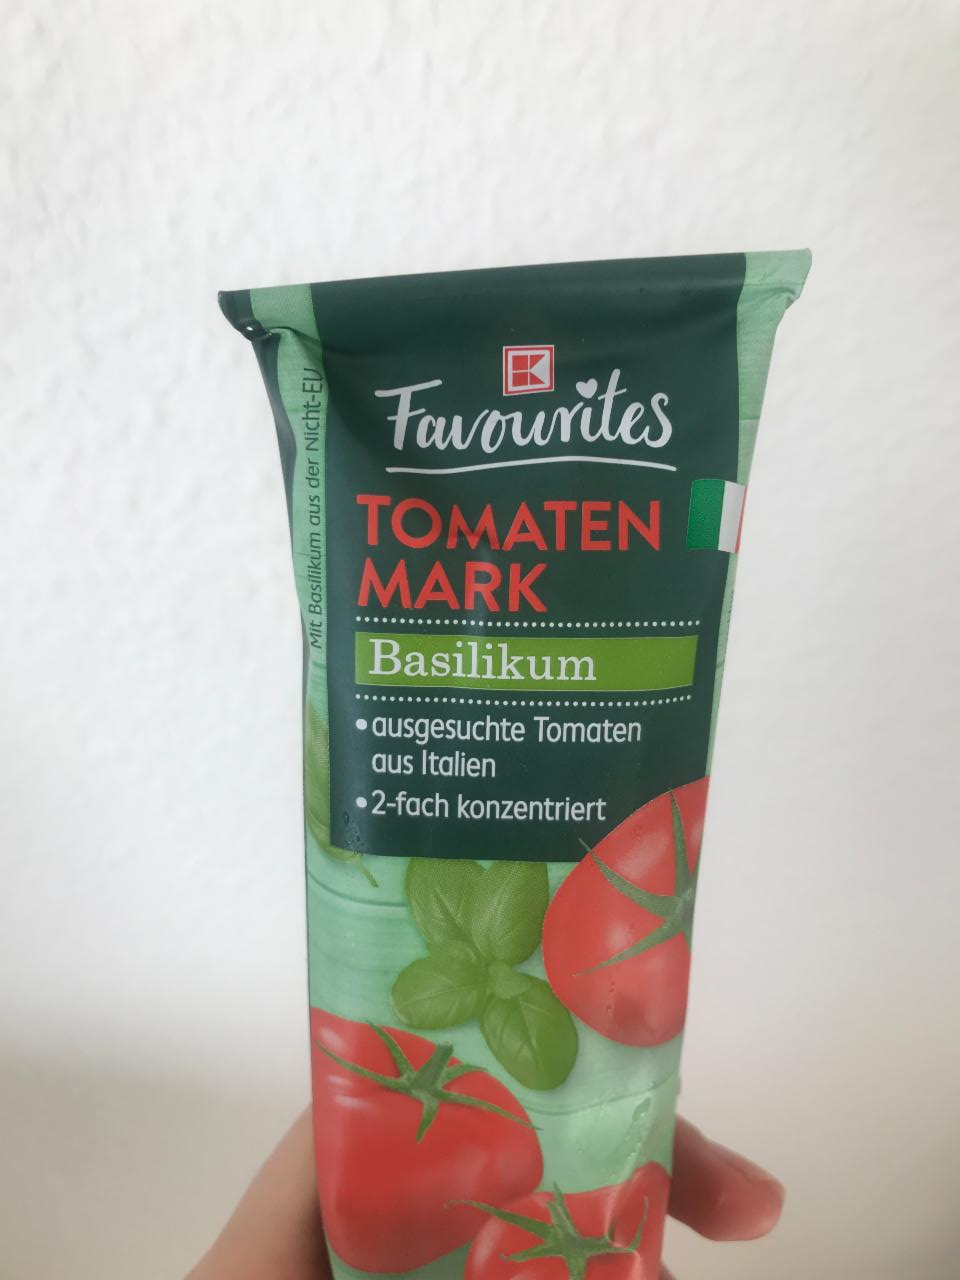 Fotografie - tomaten mark basilikum K-Favourites